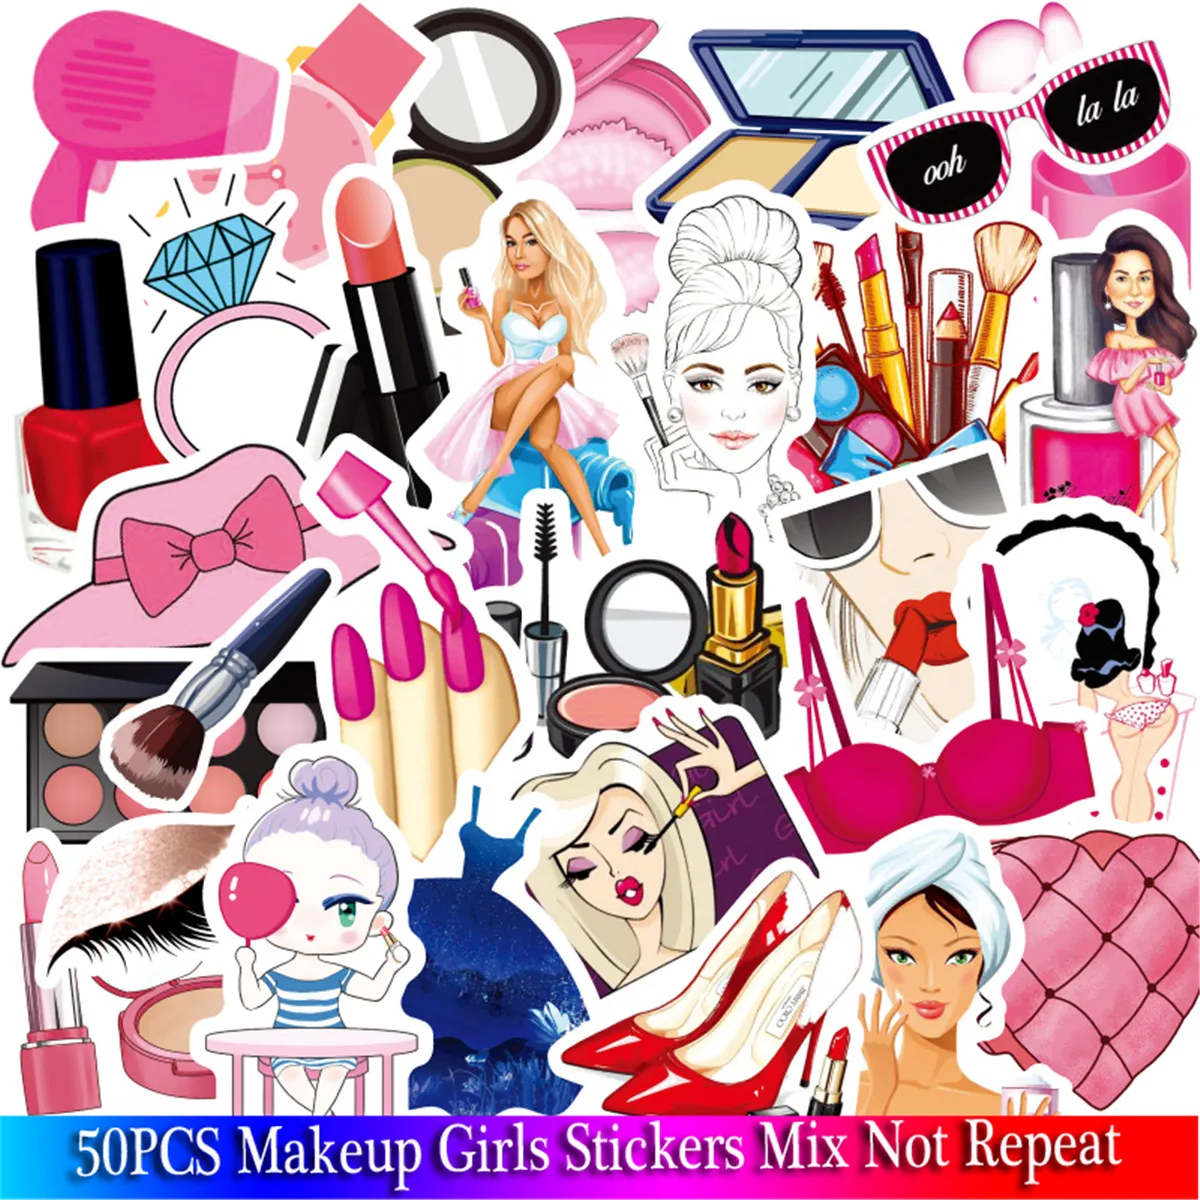 50 PCS Makeup Girls Pink Stickers Sets For Laptop Motorcycle Snowboard Luggage Phone Fridge Car DIY Graffiti Stickers Packs BP1023YL